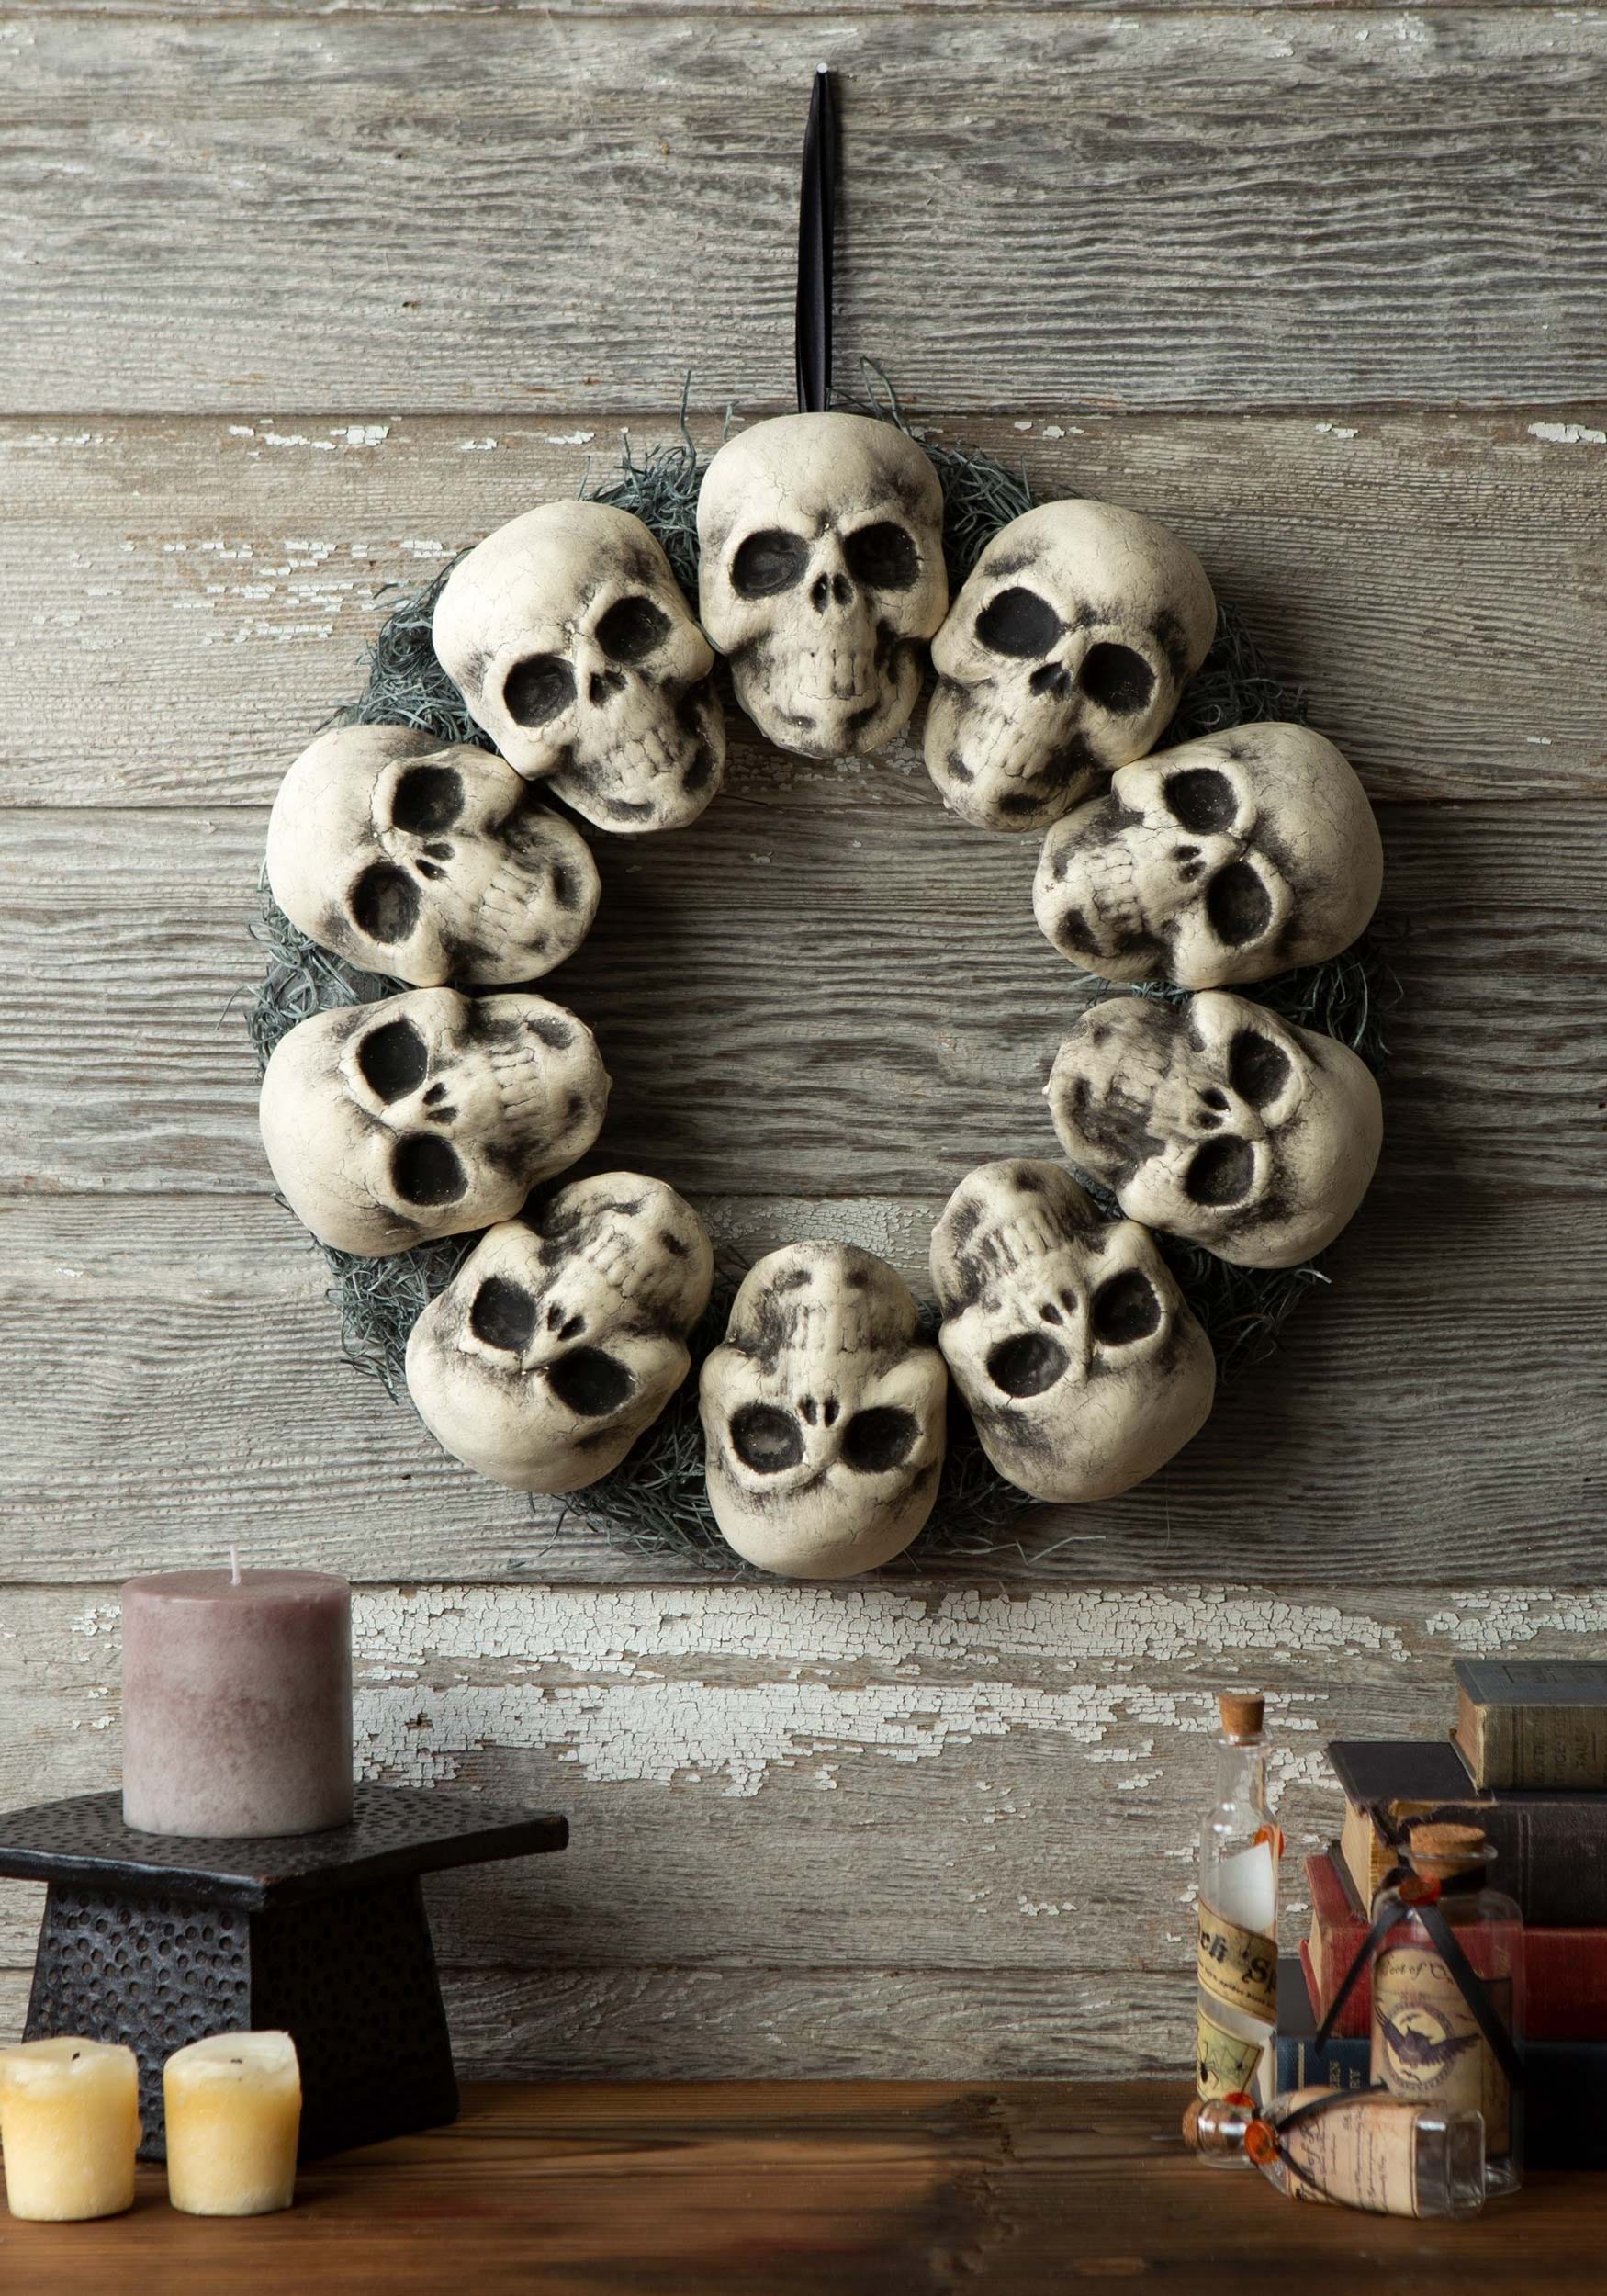 15-Inch Skull Wreath Decoration